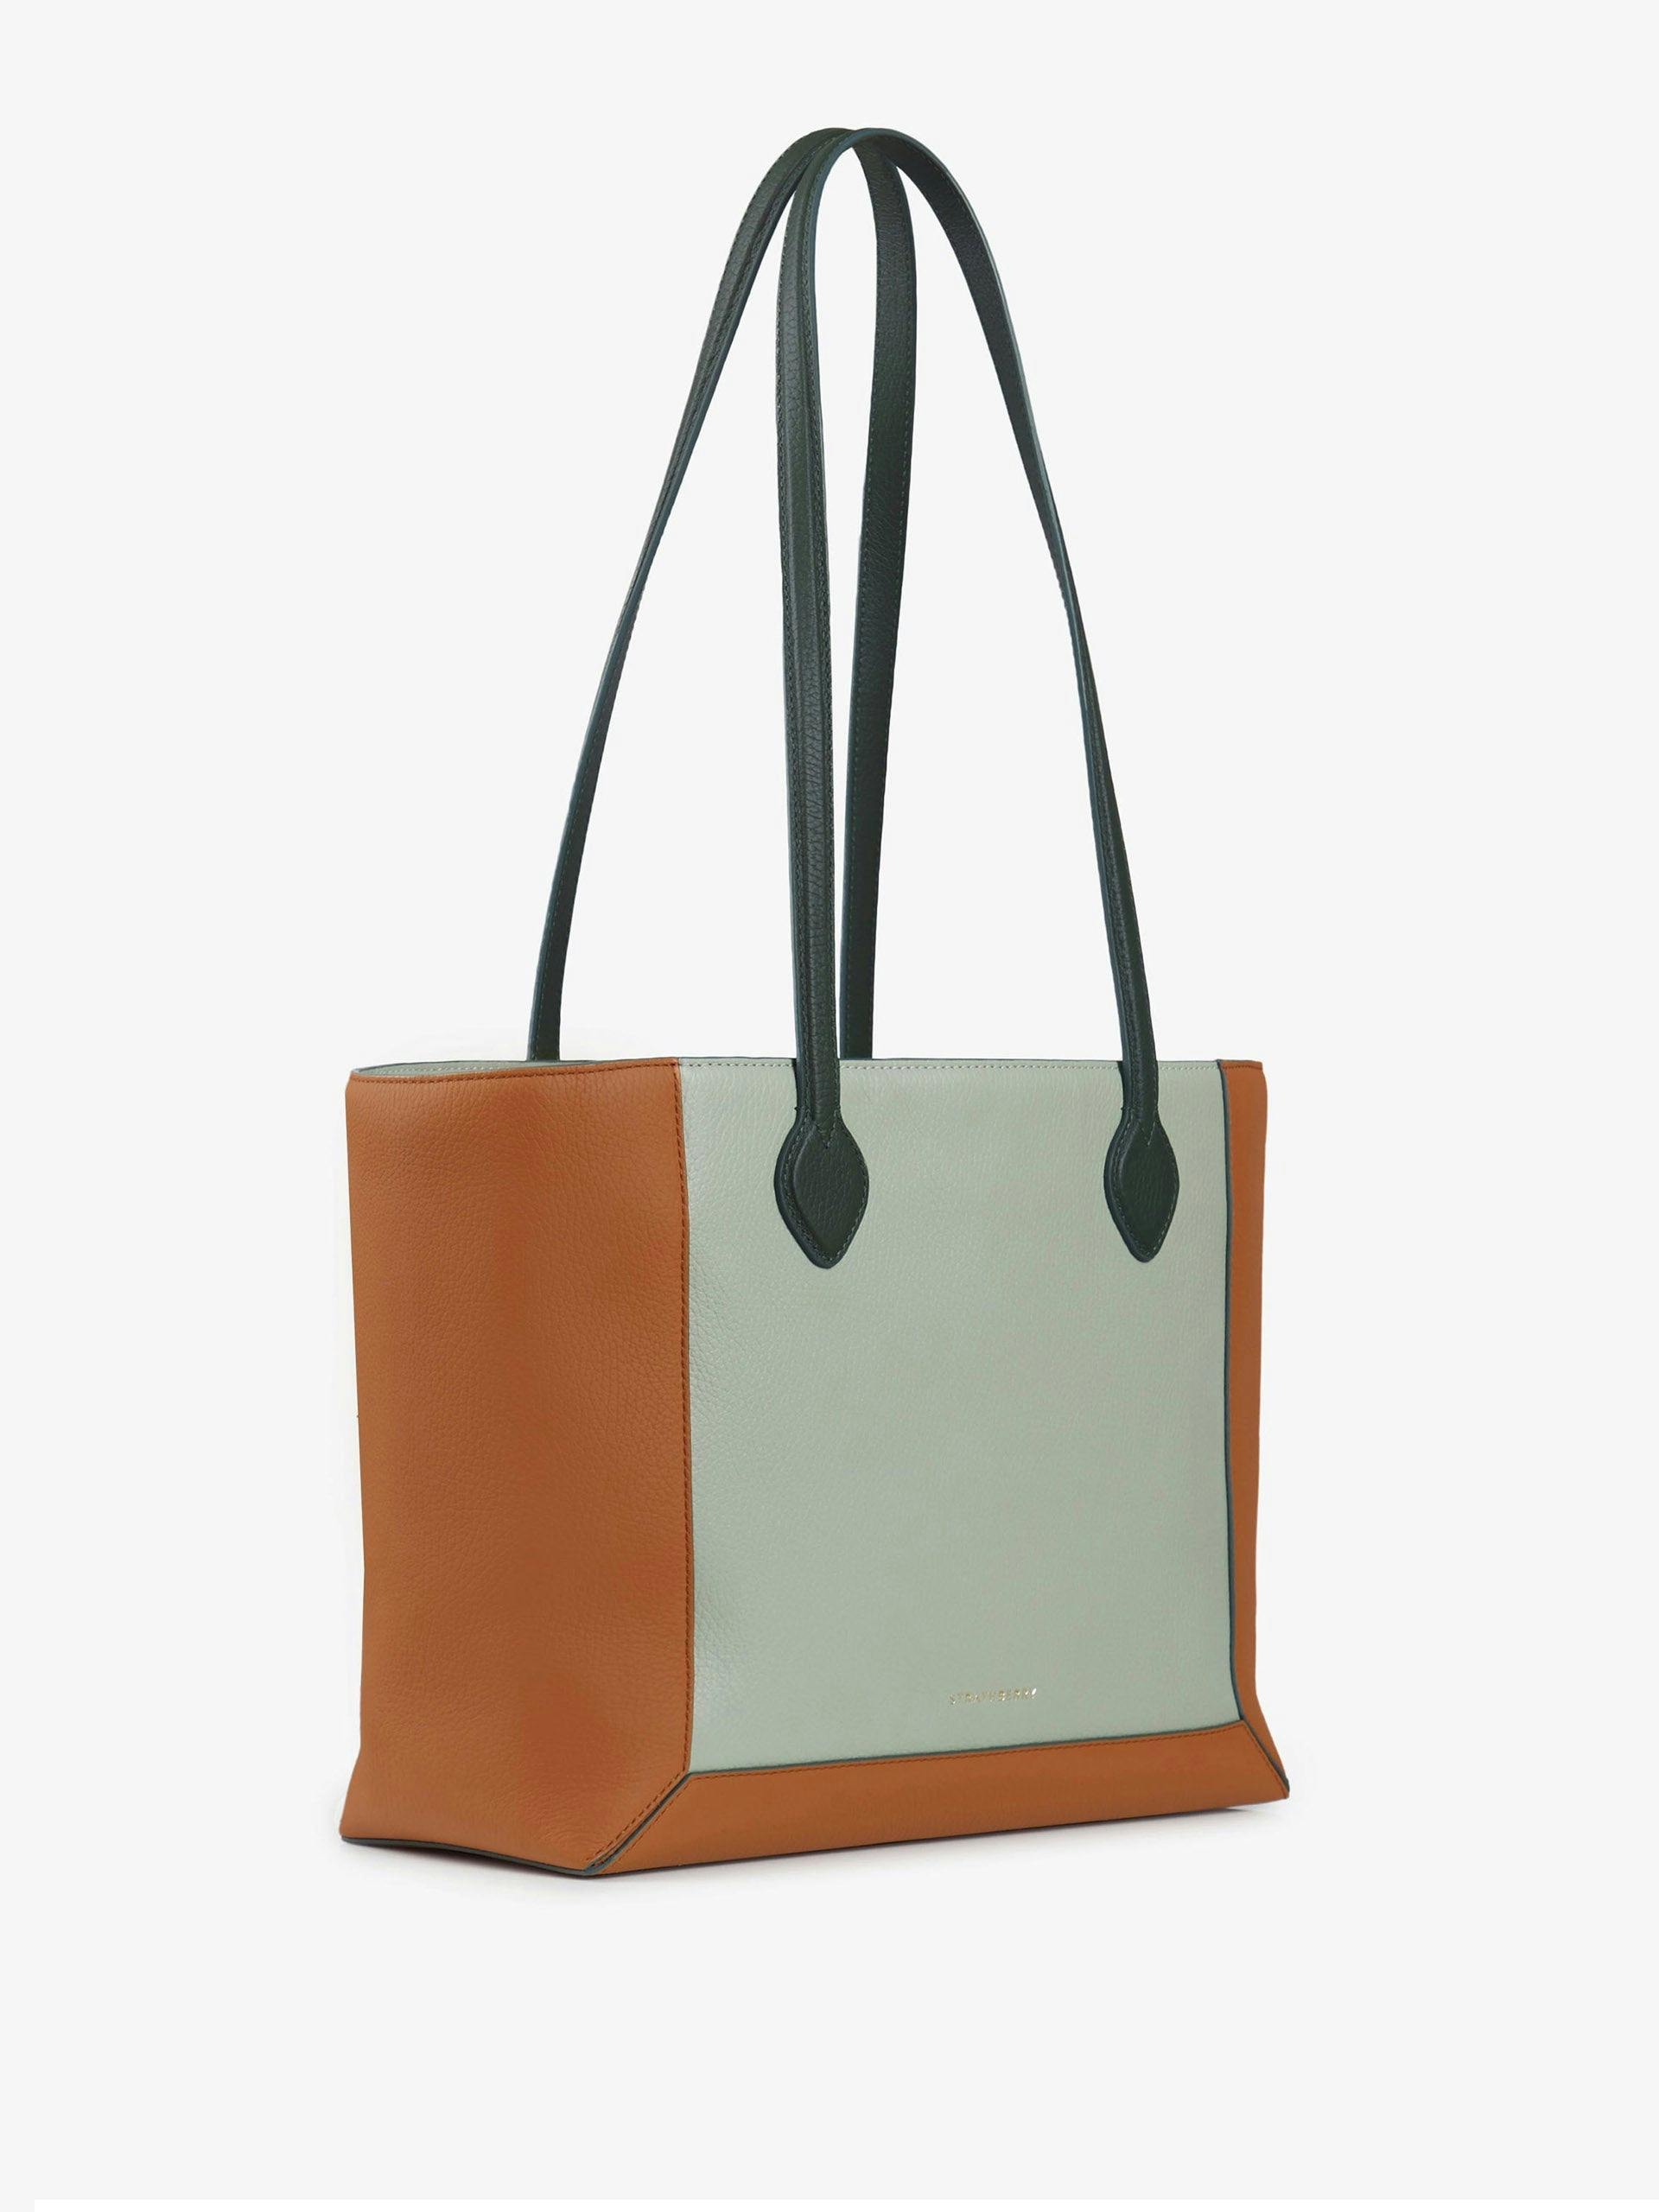 Tan and green Mosaic Shopper tote bag